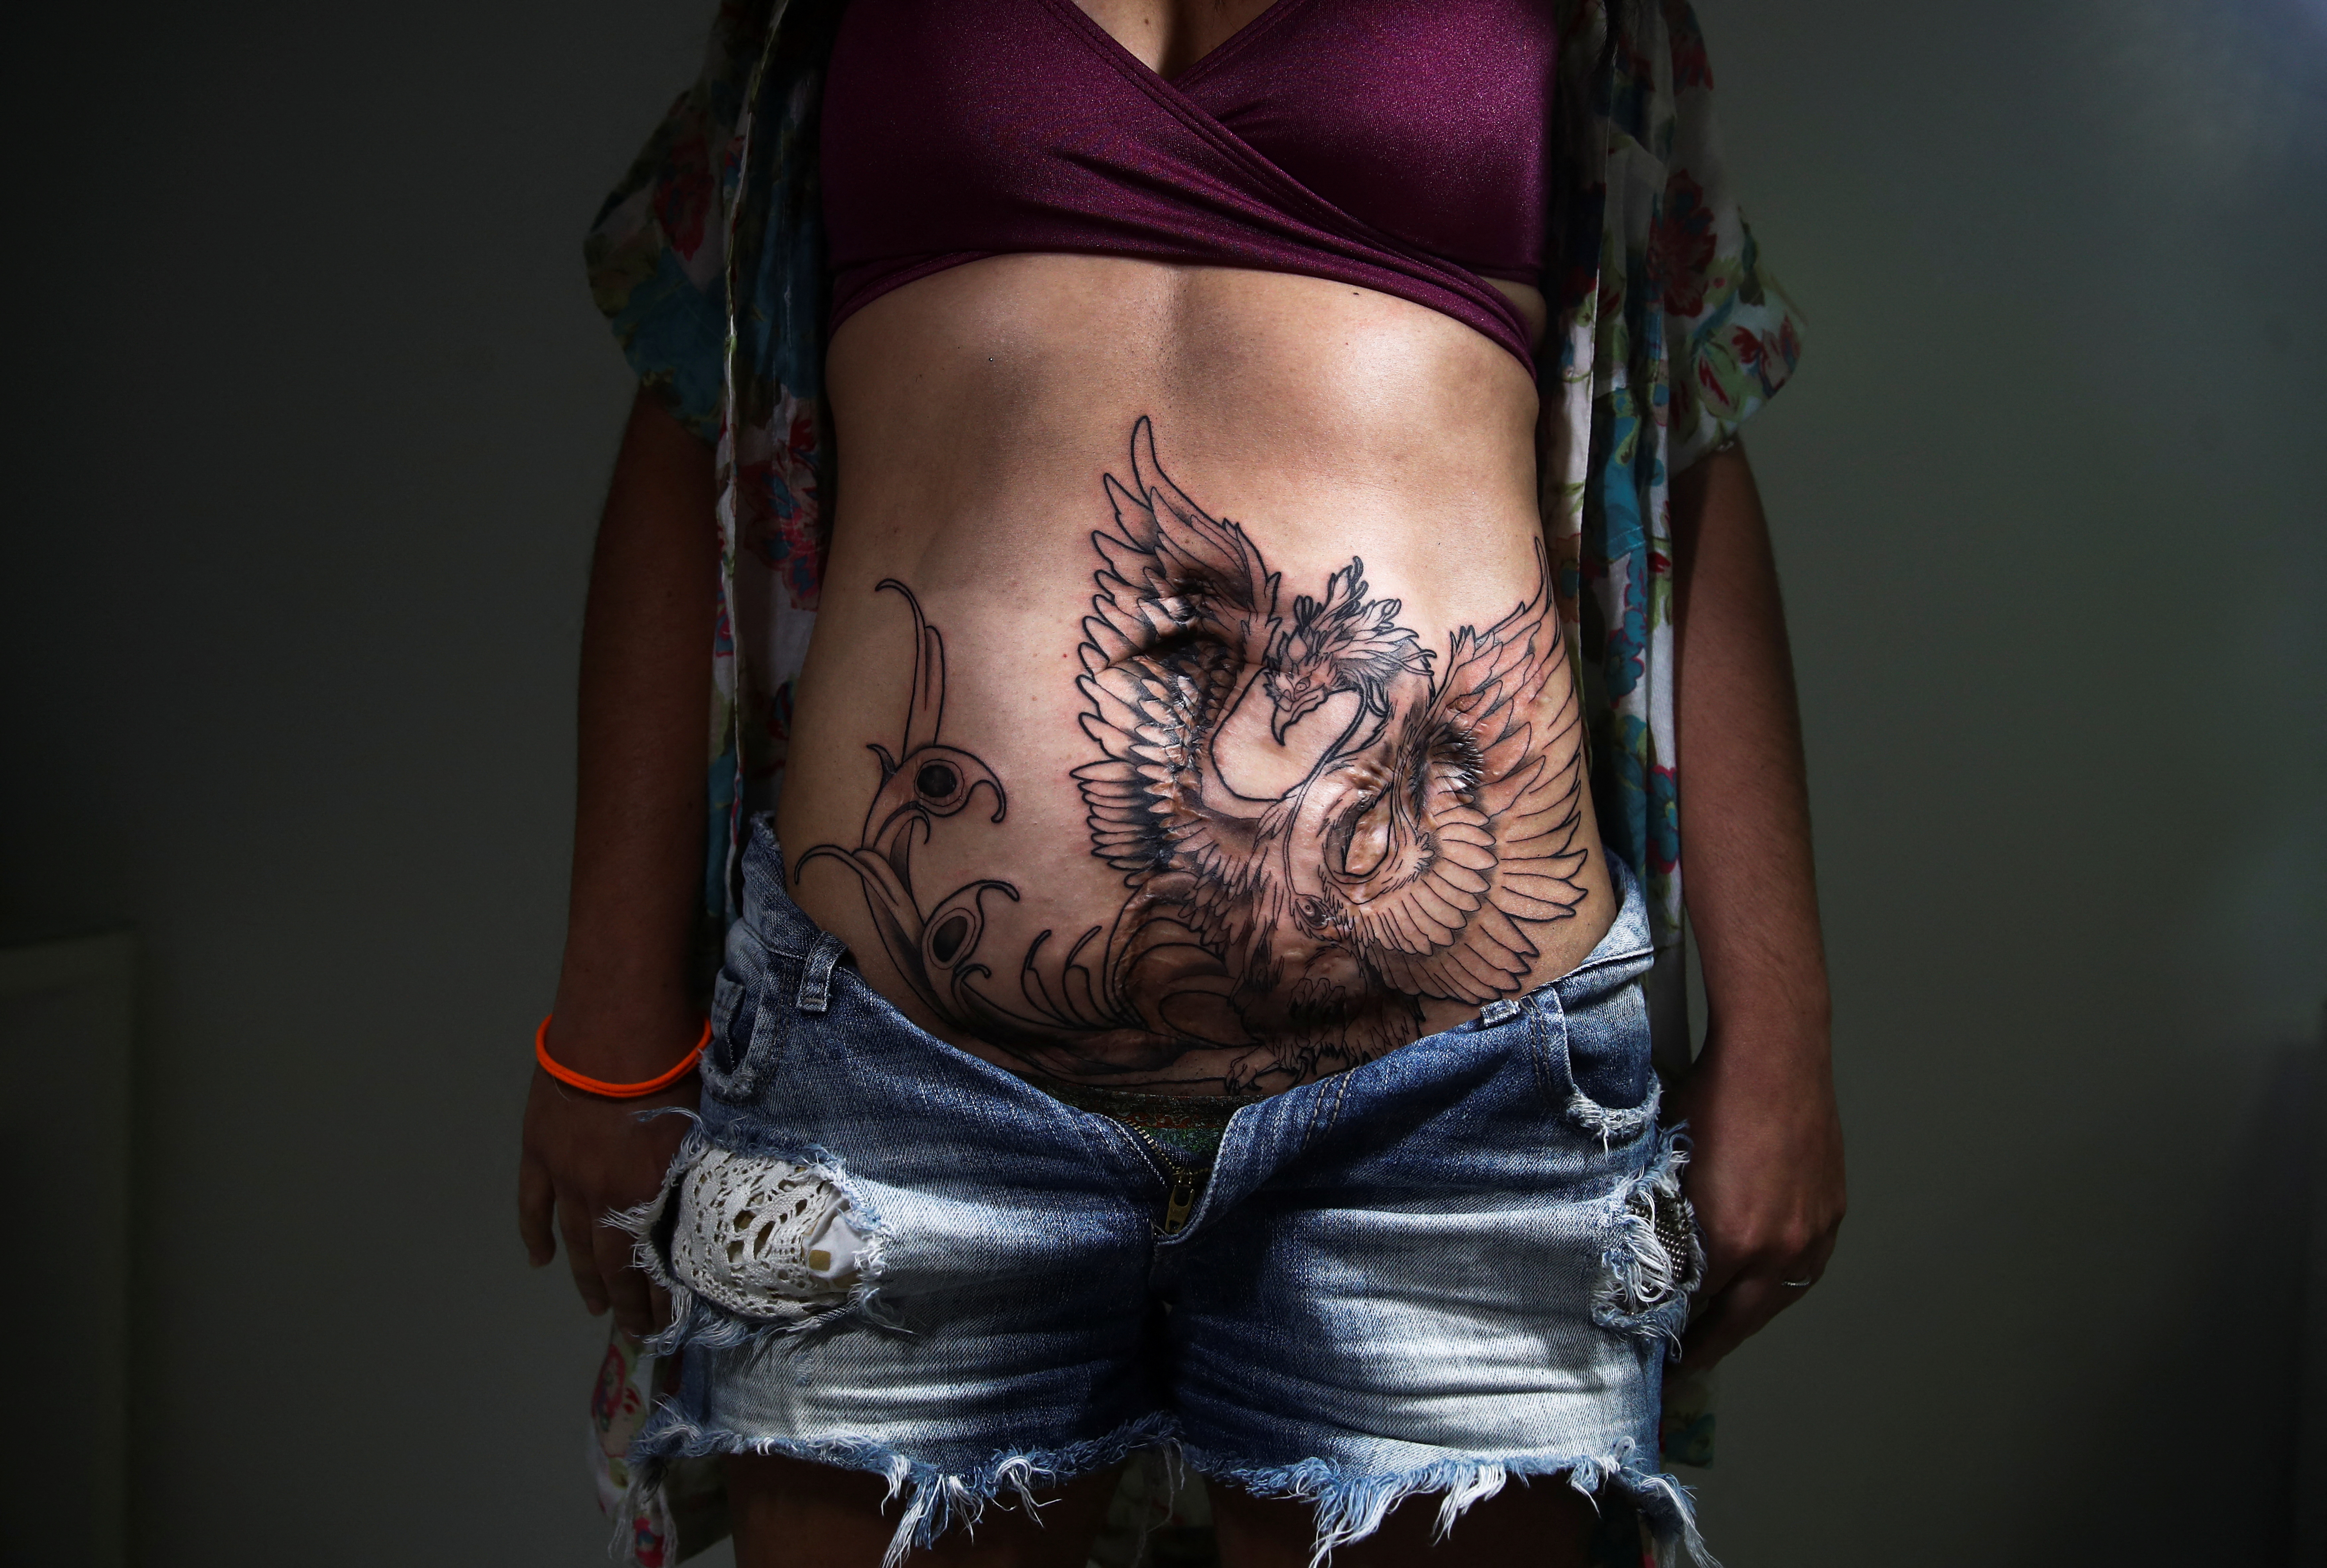 Turning trauma into art, Brazilian tattoo artist gives women reason to  smile